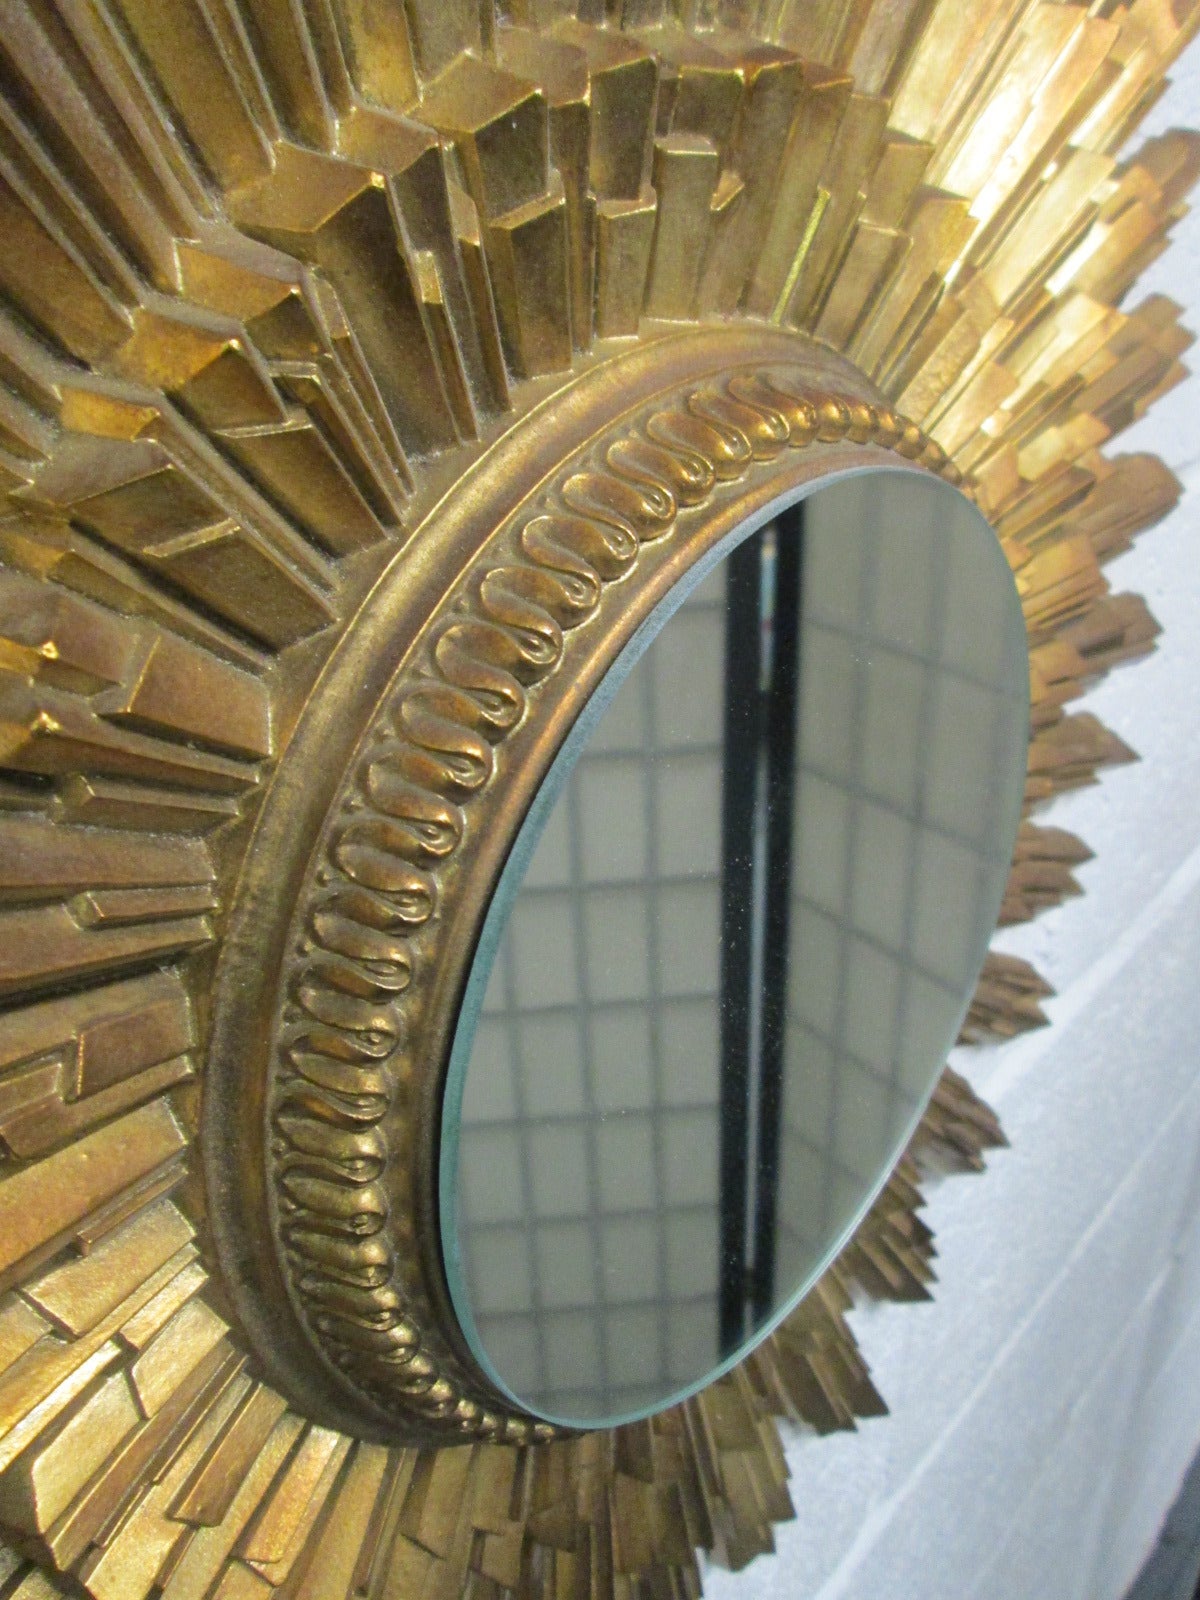 Gold Sunburst Mirror For Sale at 1stdibs